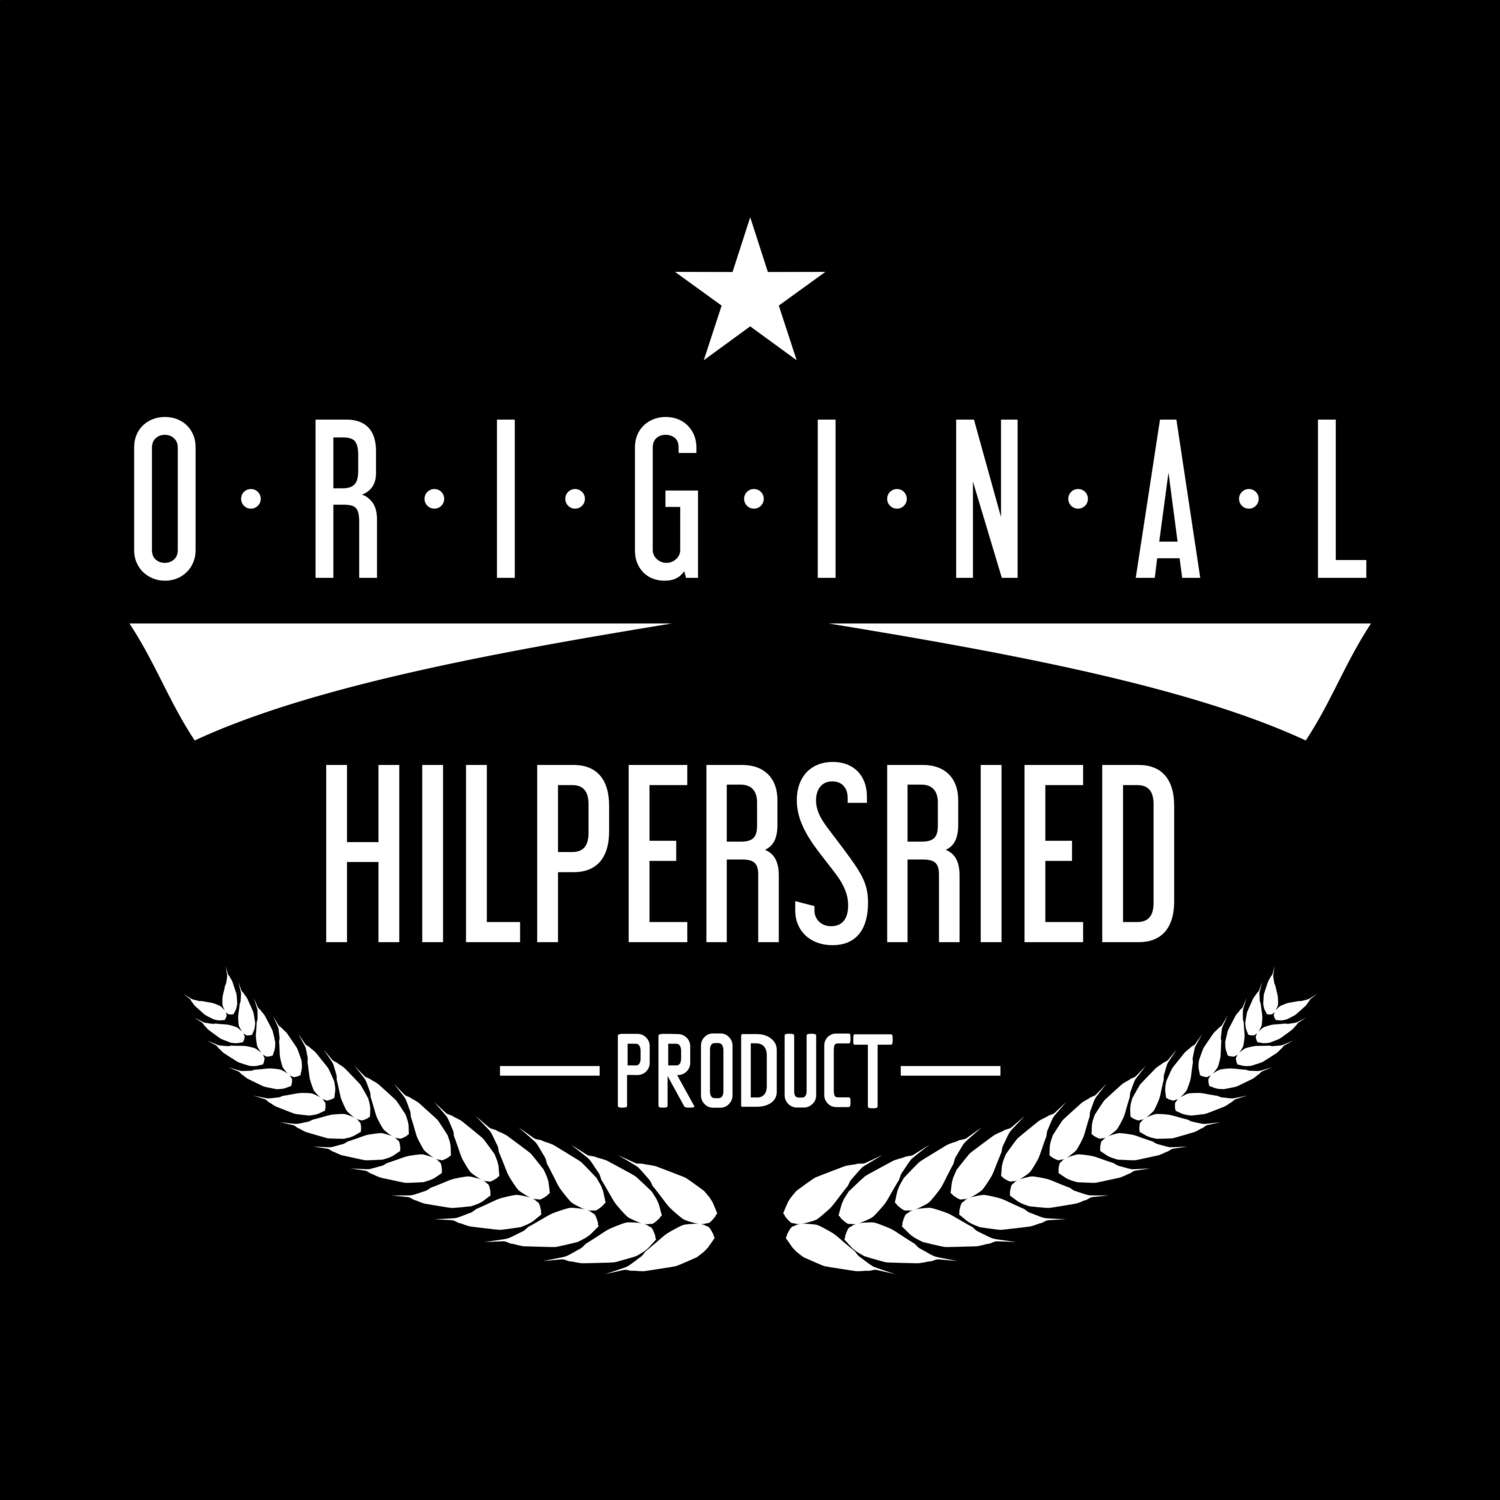 Hilpersried T-Shirt »Original Product«